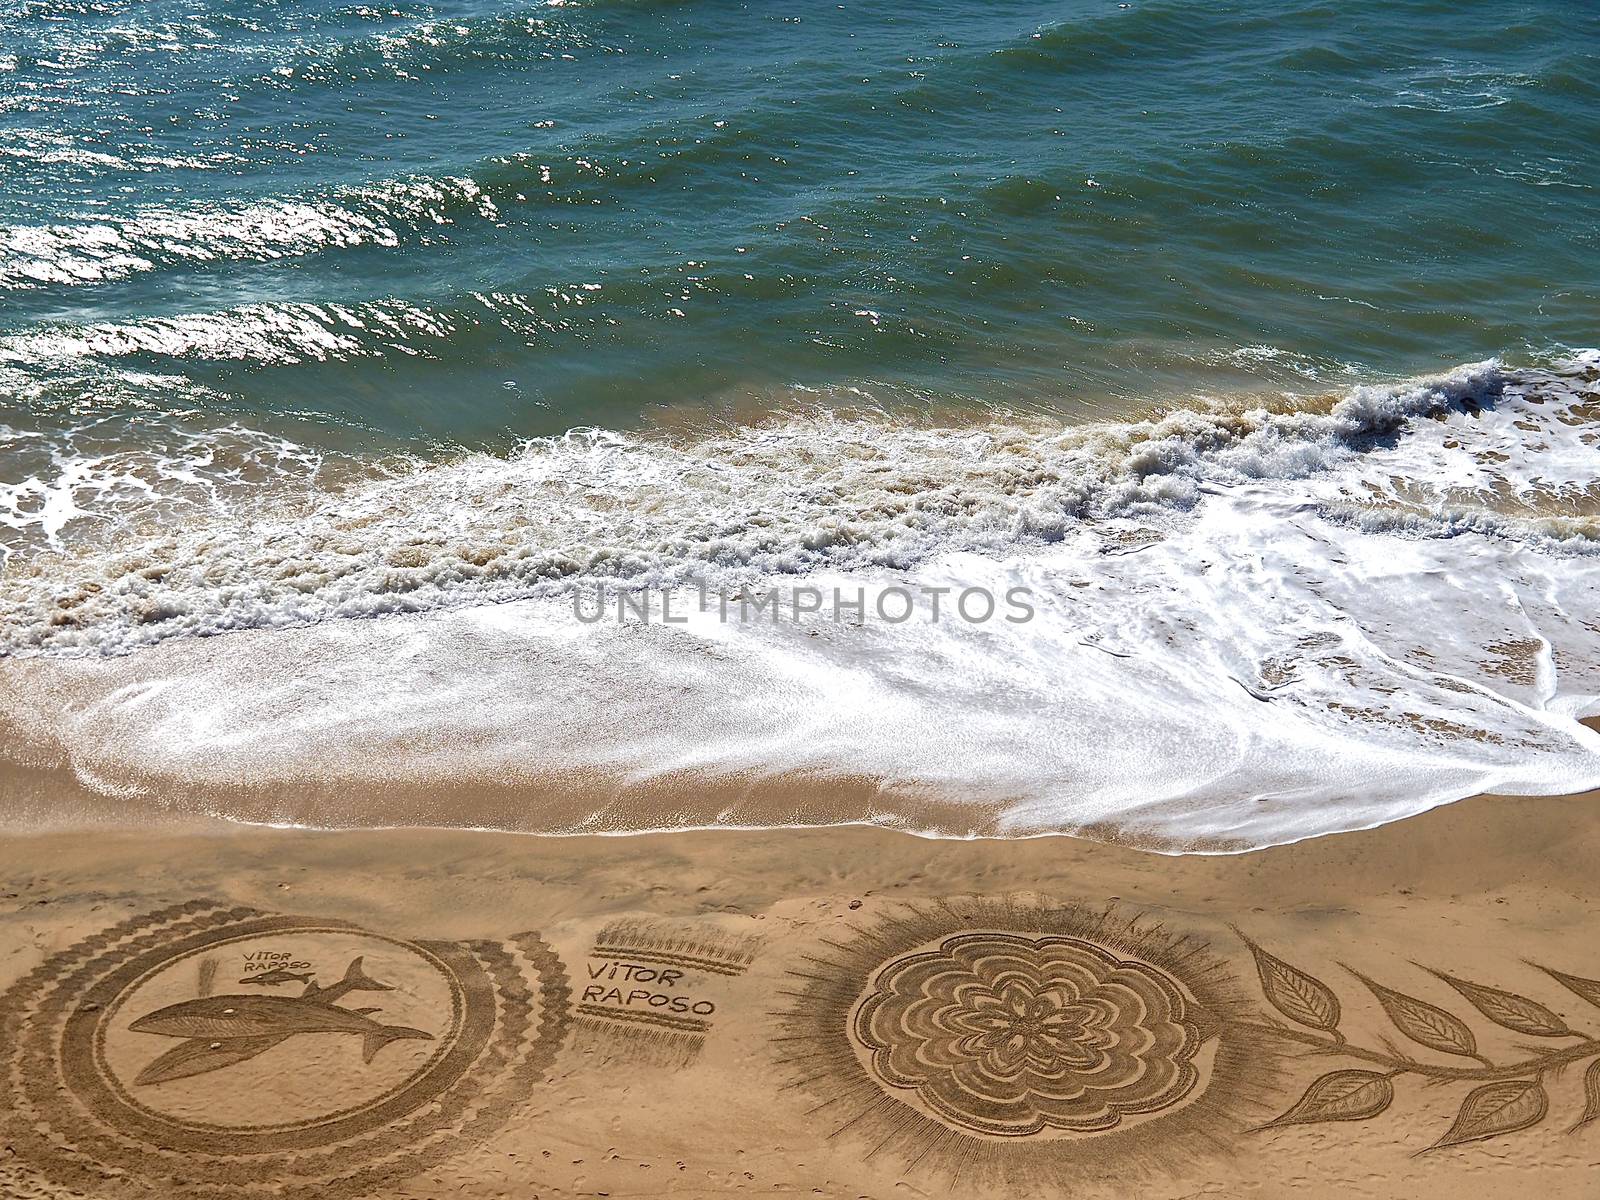 Mandalas drawn in the sand at Praia Maria Luisa in Albufeira in Portugal